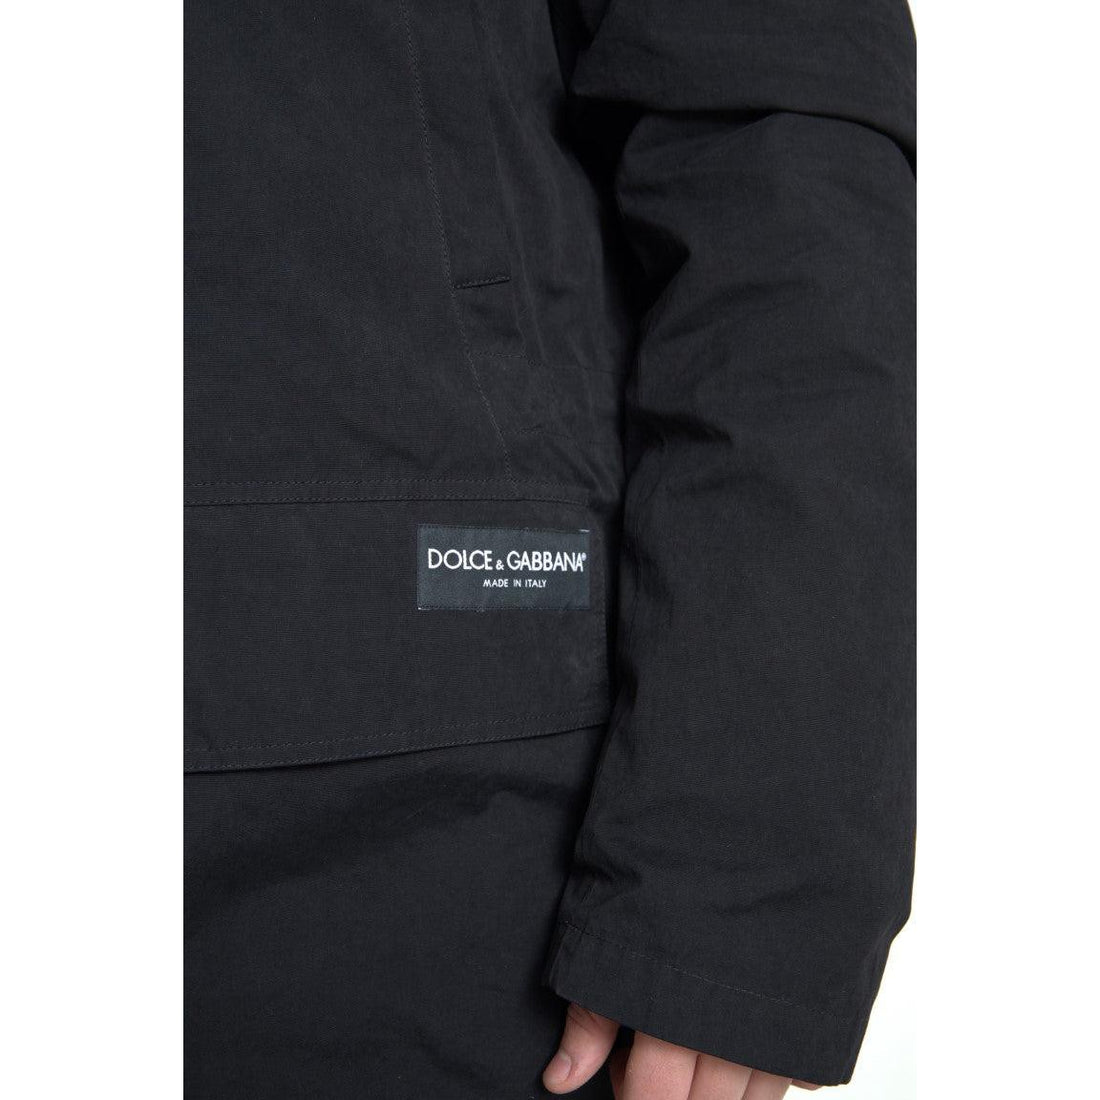 Dolce & Gabbana Elegant Black Hooded Trench Coat